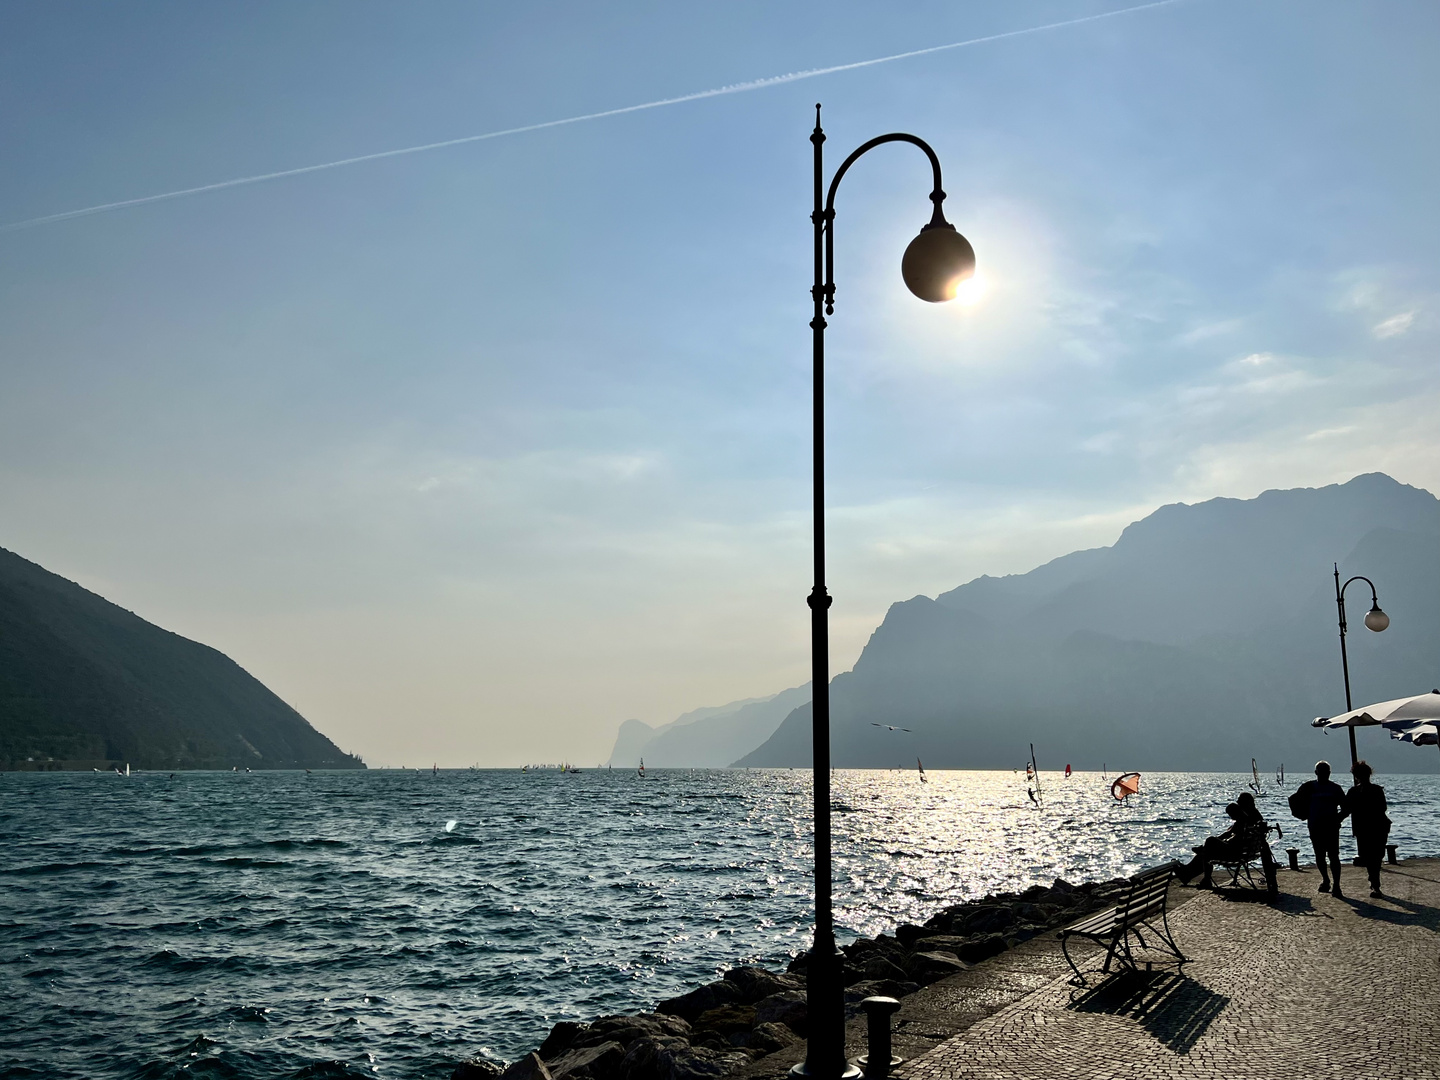 Lago di Garda / Torbole